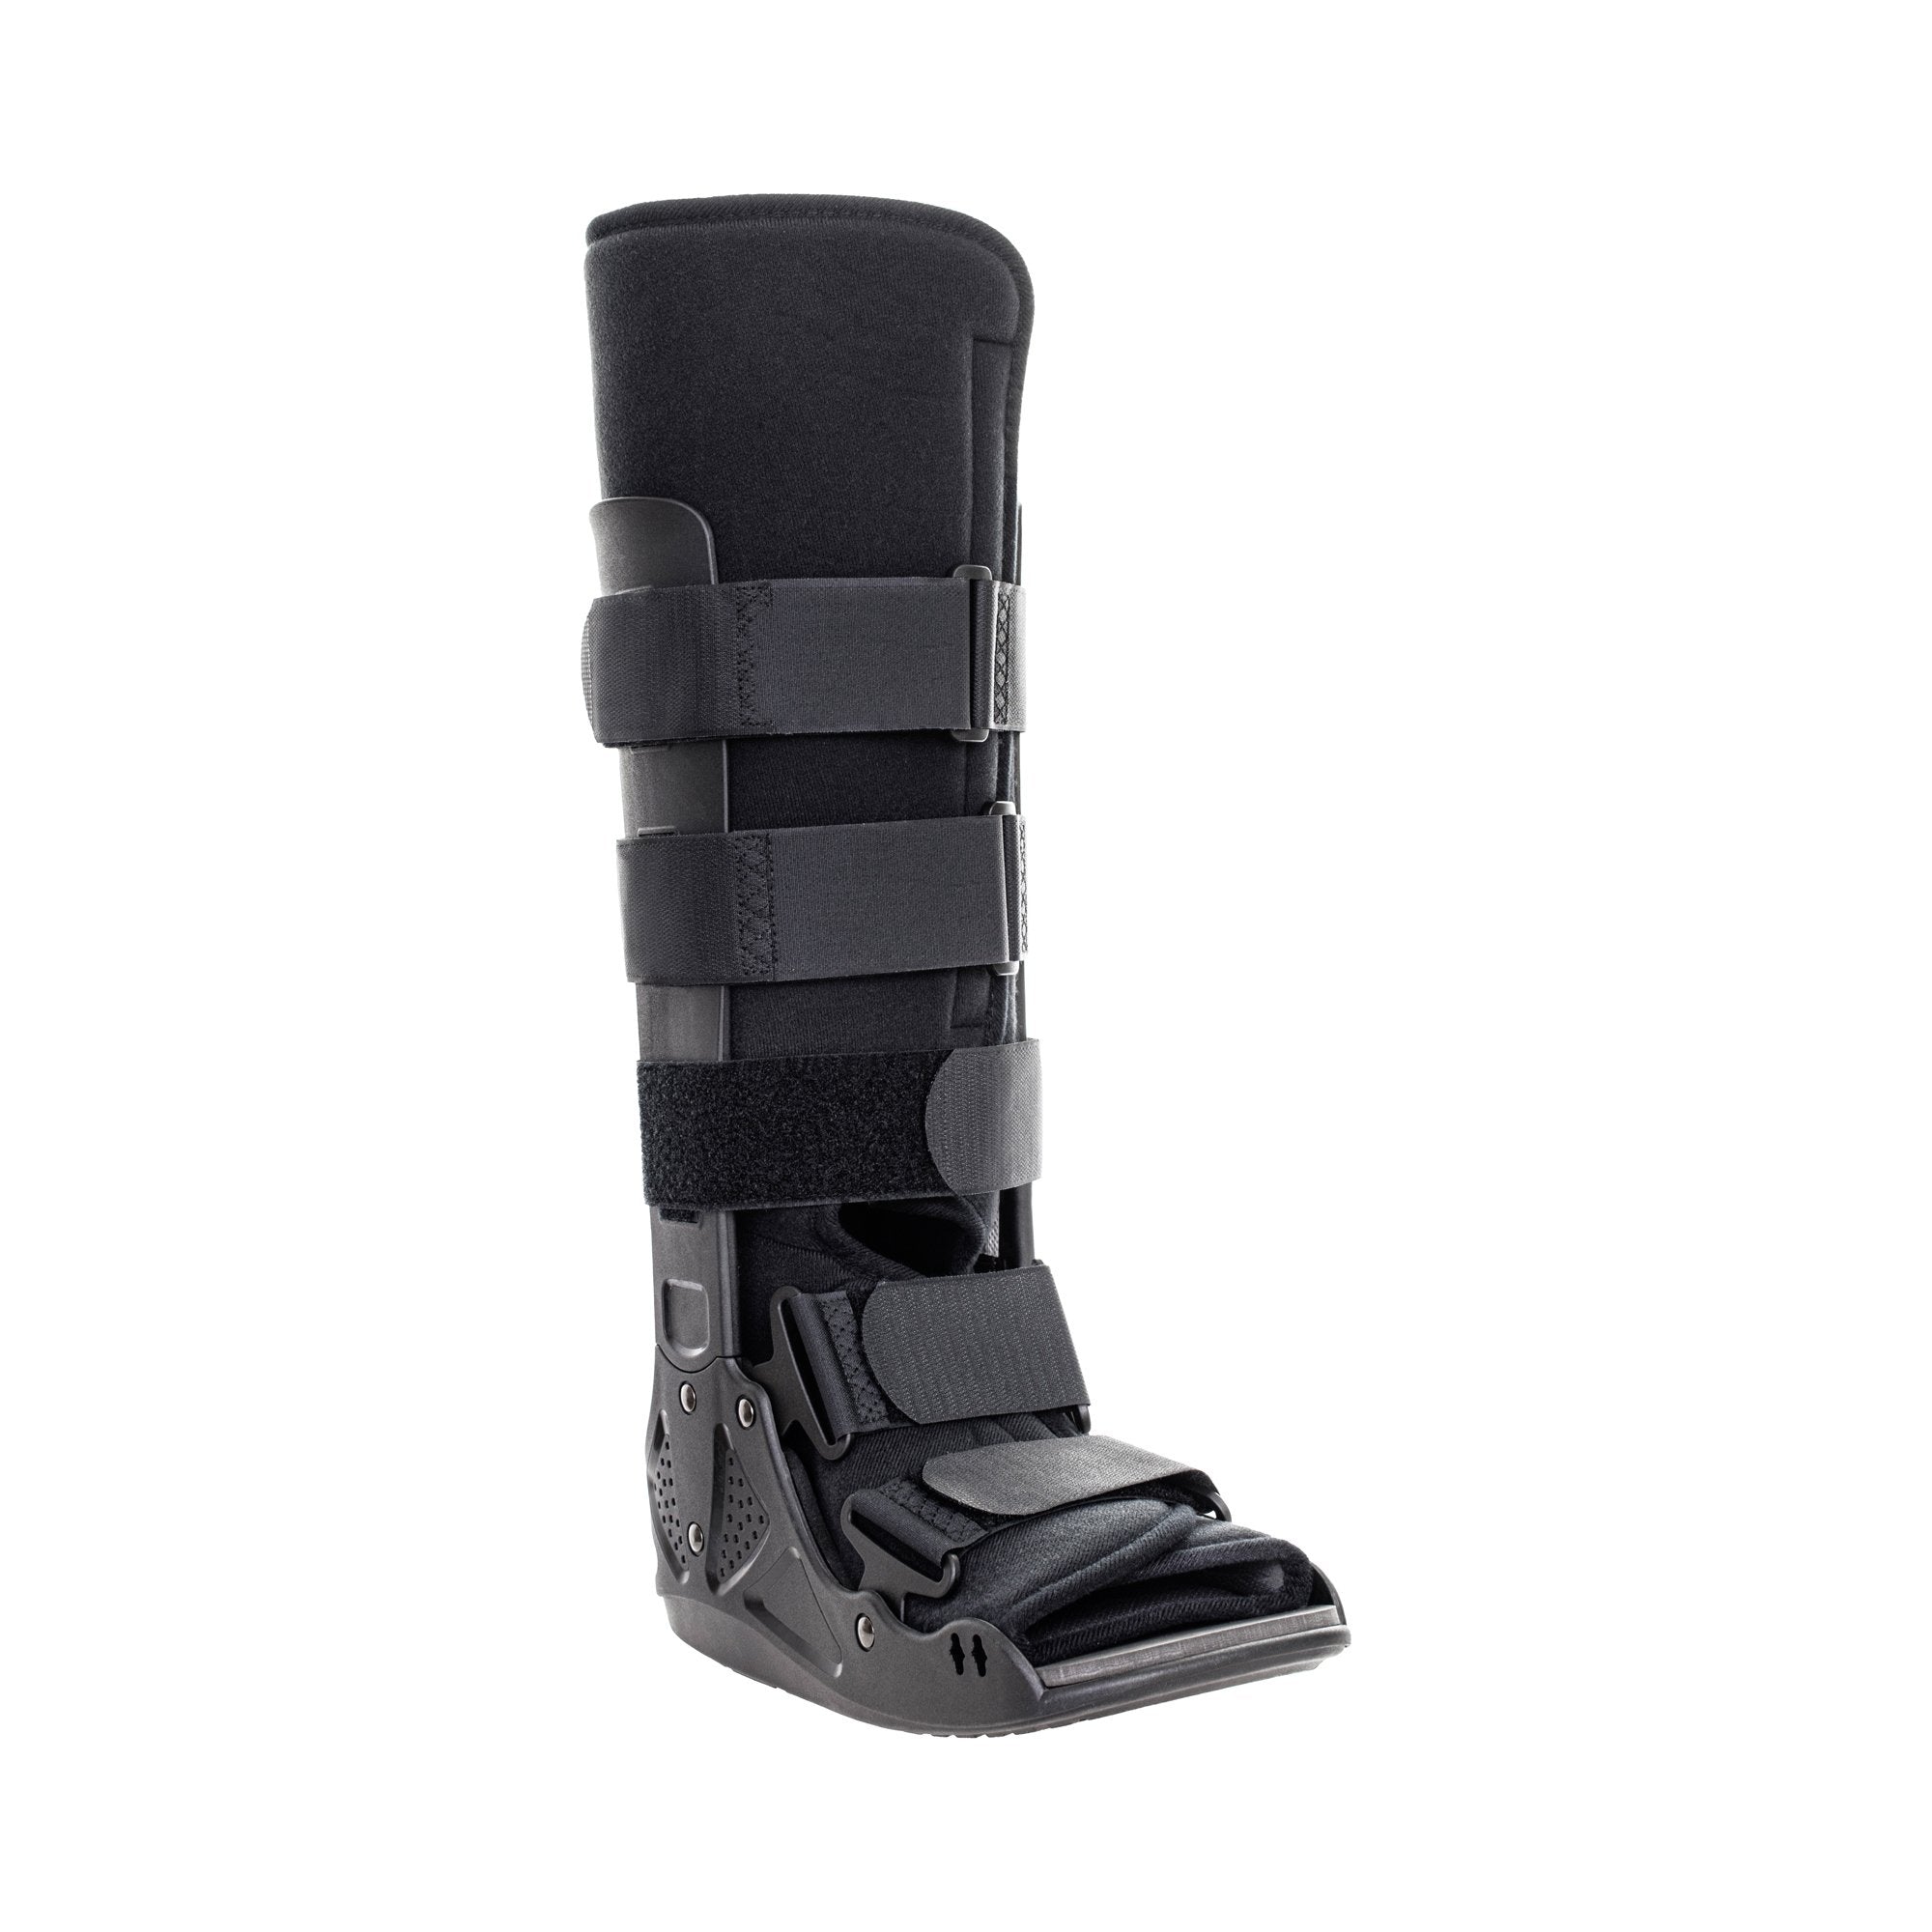 Walker Boot McKesson Non-Pneumatic Medium Left or Right Foot Adult